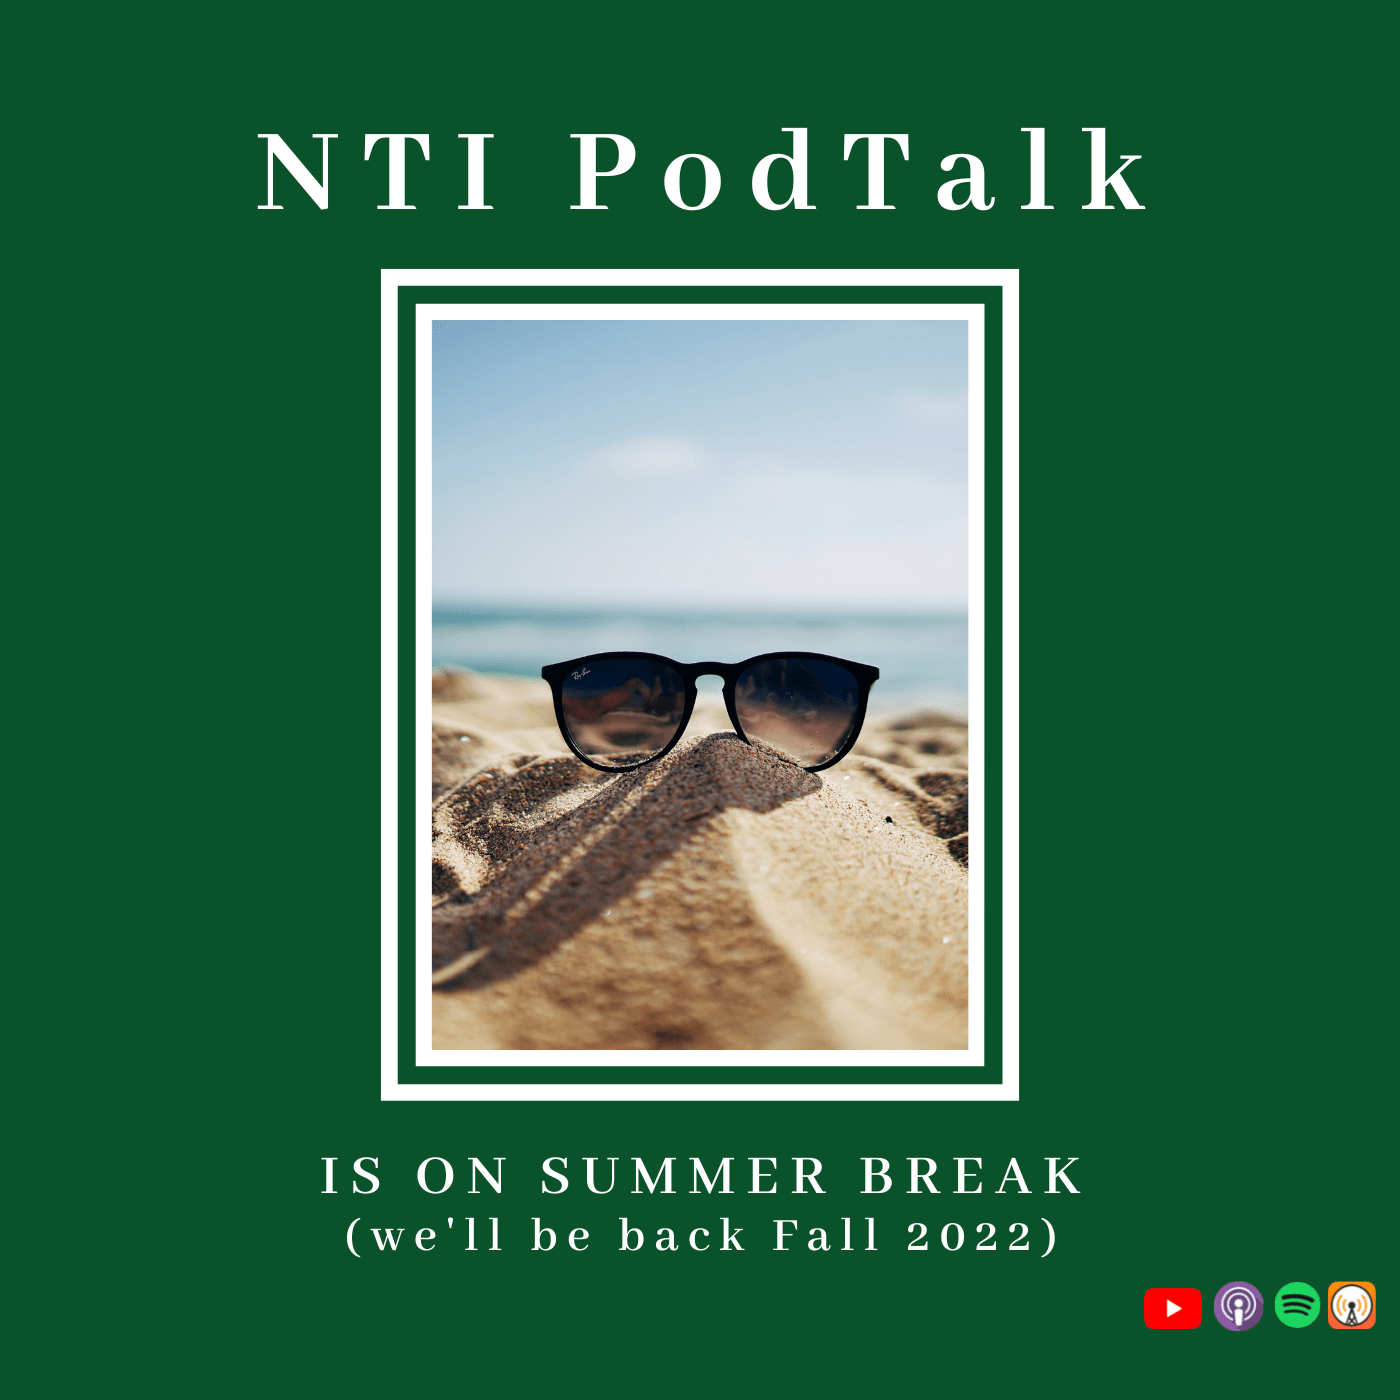 Featured image for “NTI PodTalk Summer Break Announcement”